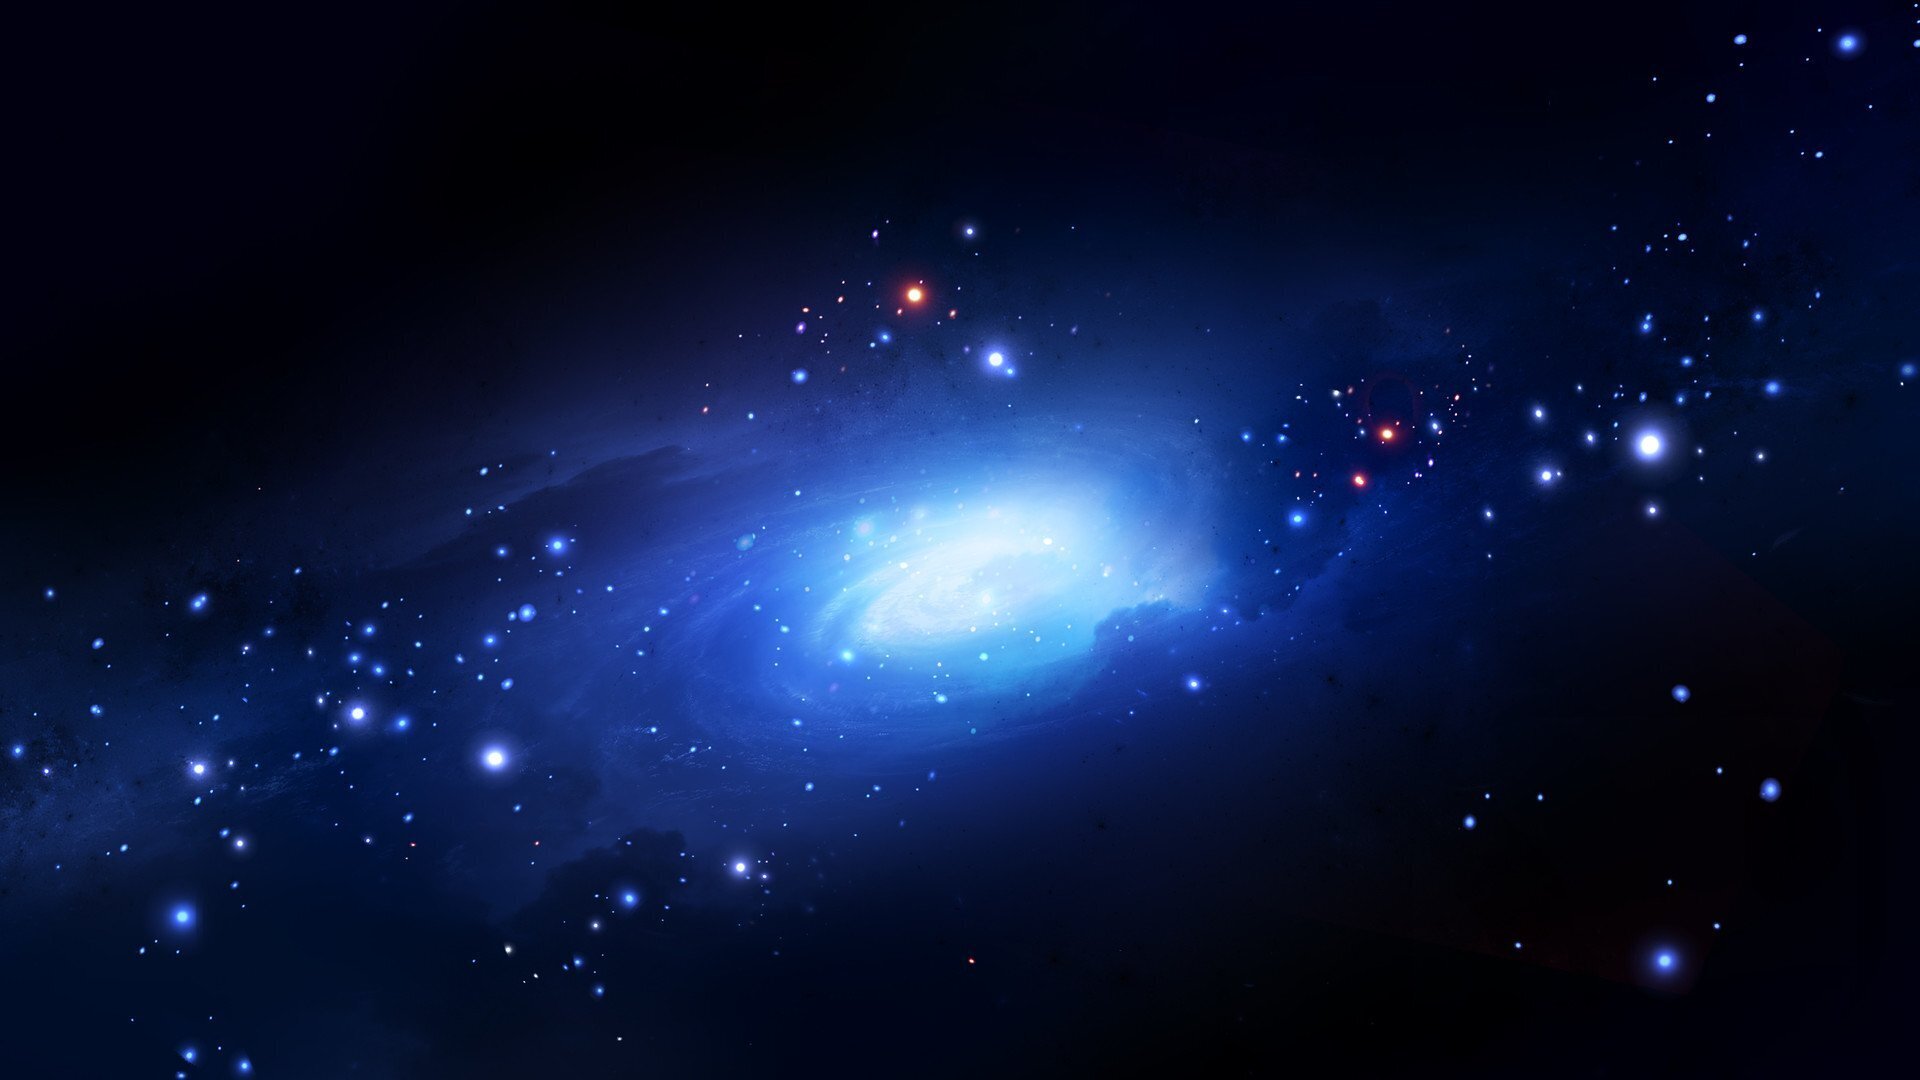 hinh galaxy dep 044